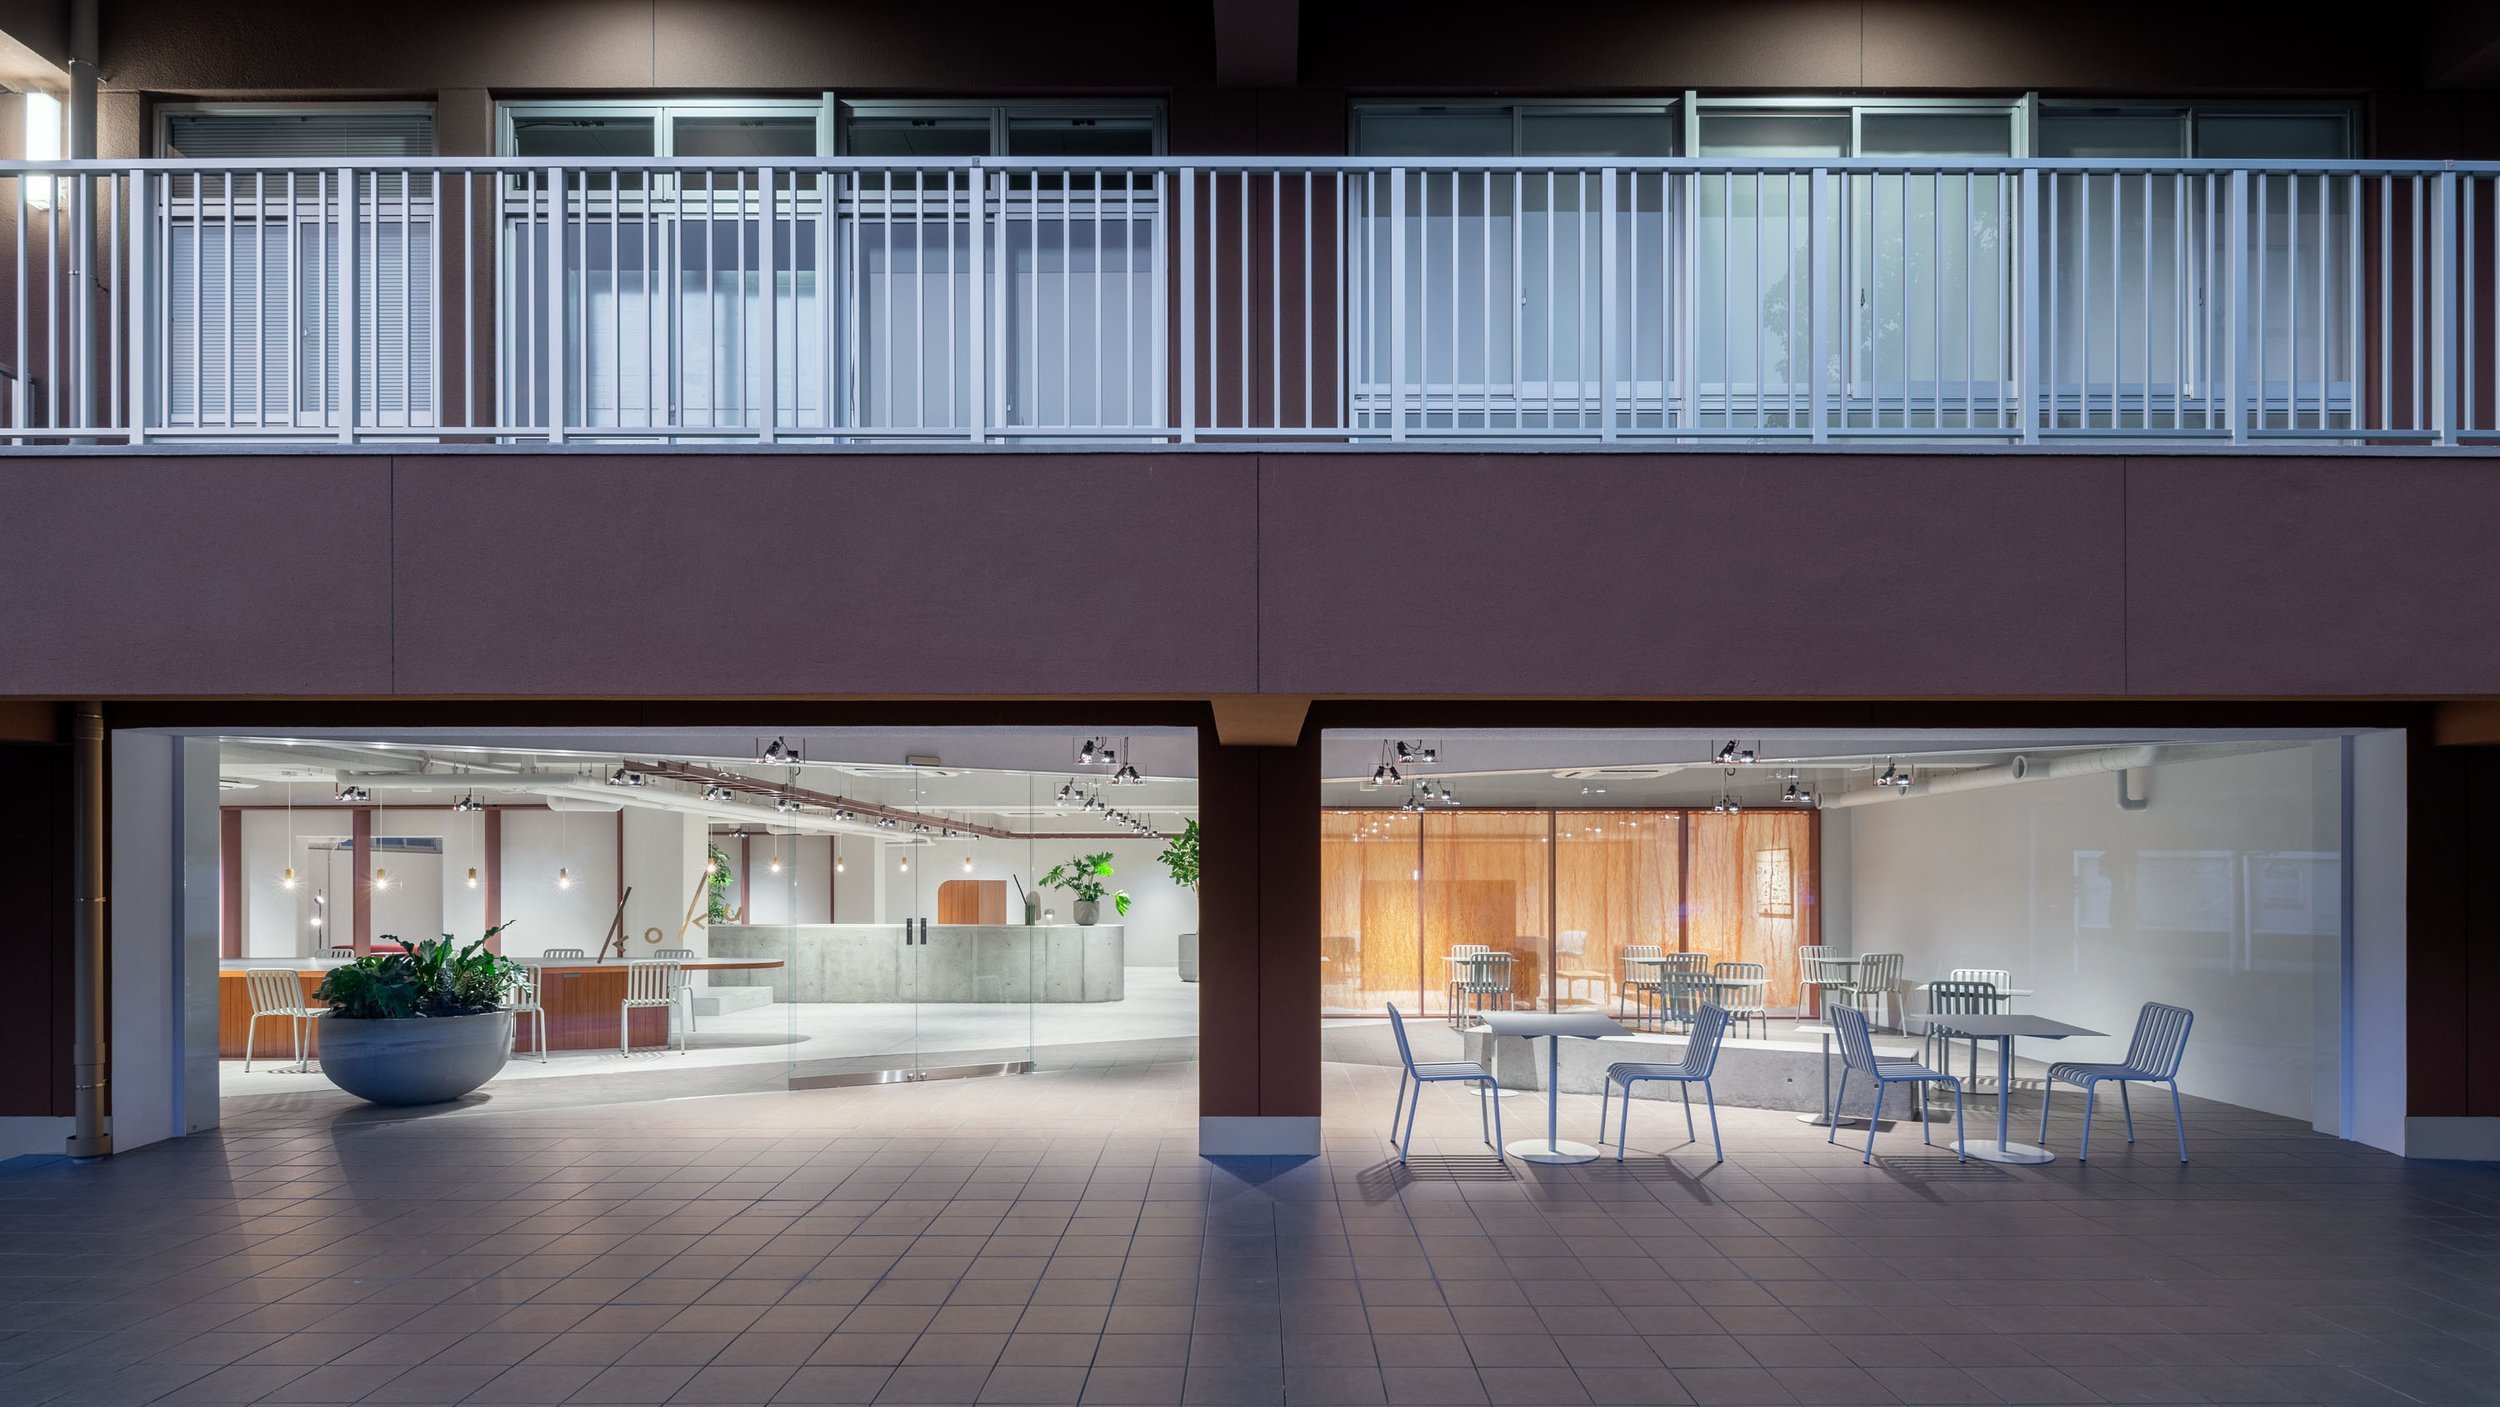  REIICHI IKEDA DESIGNの池田励一がインテリアデザインを手掛けた日本新薬のオフィス「KOKU」の外観 